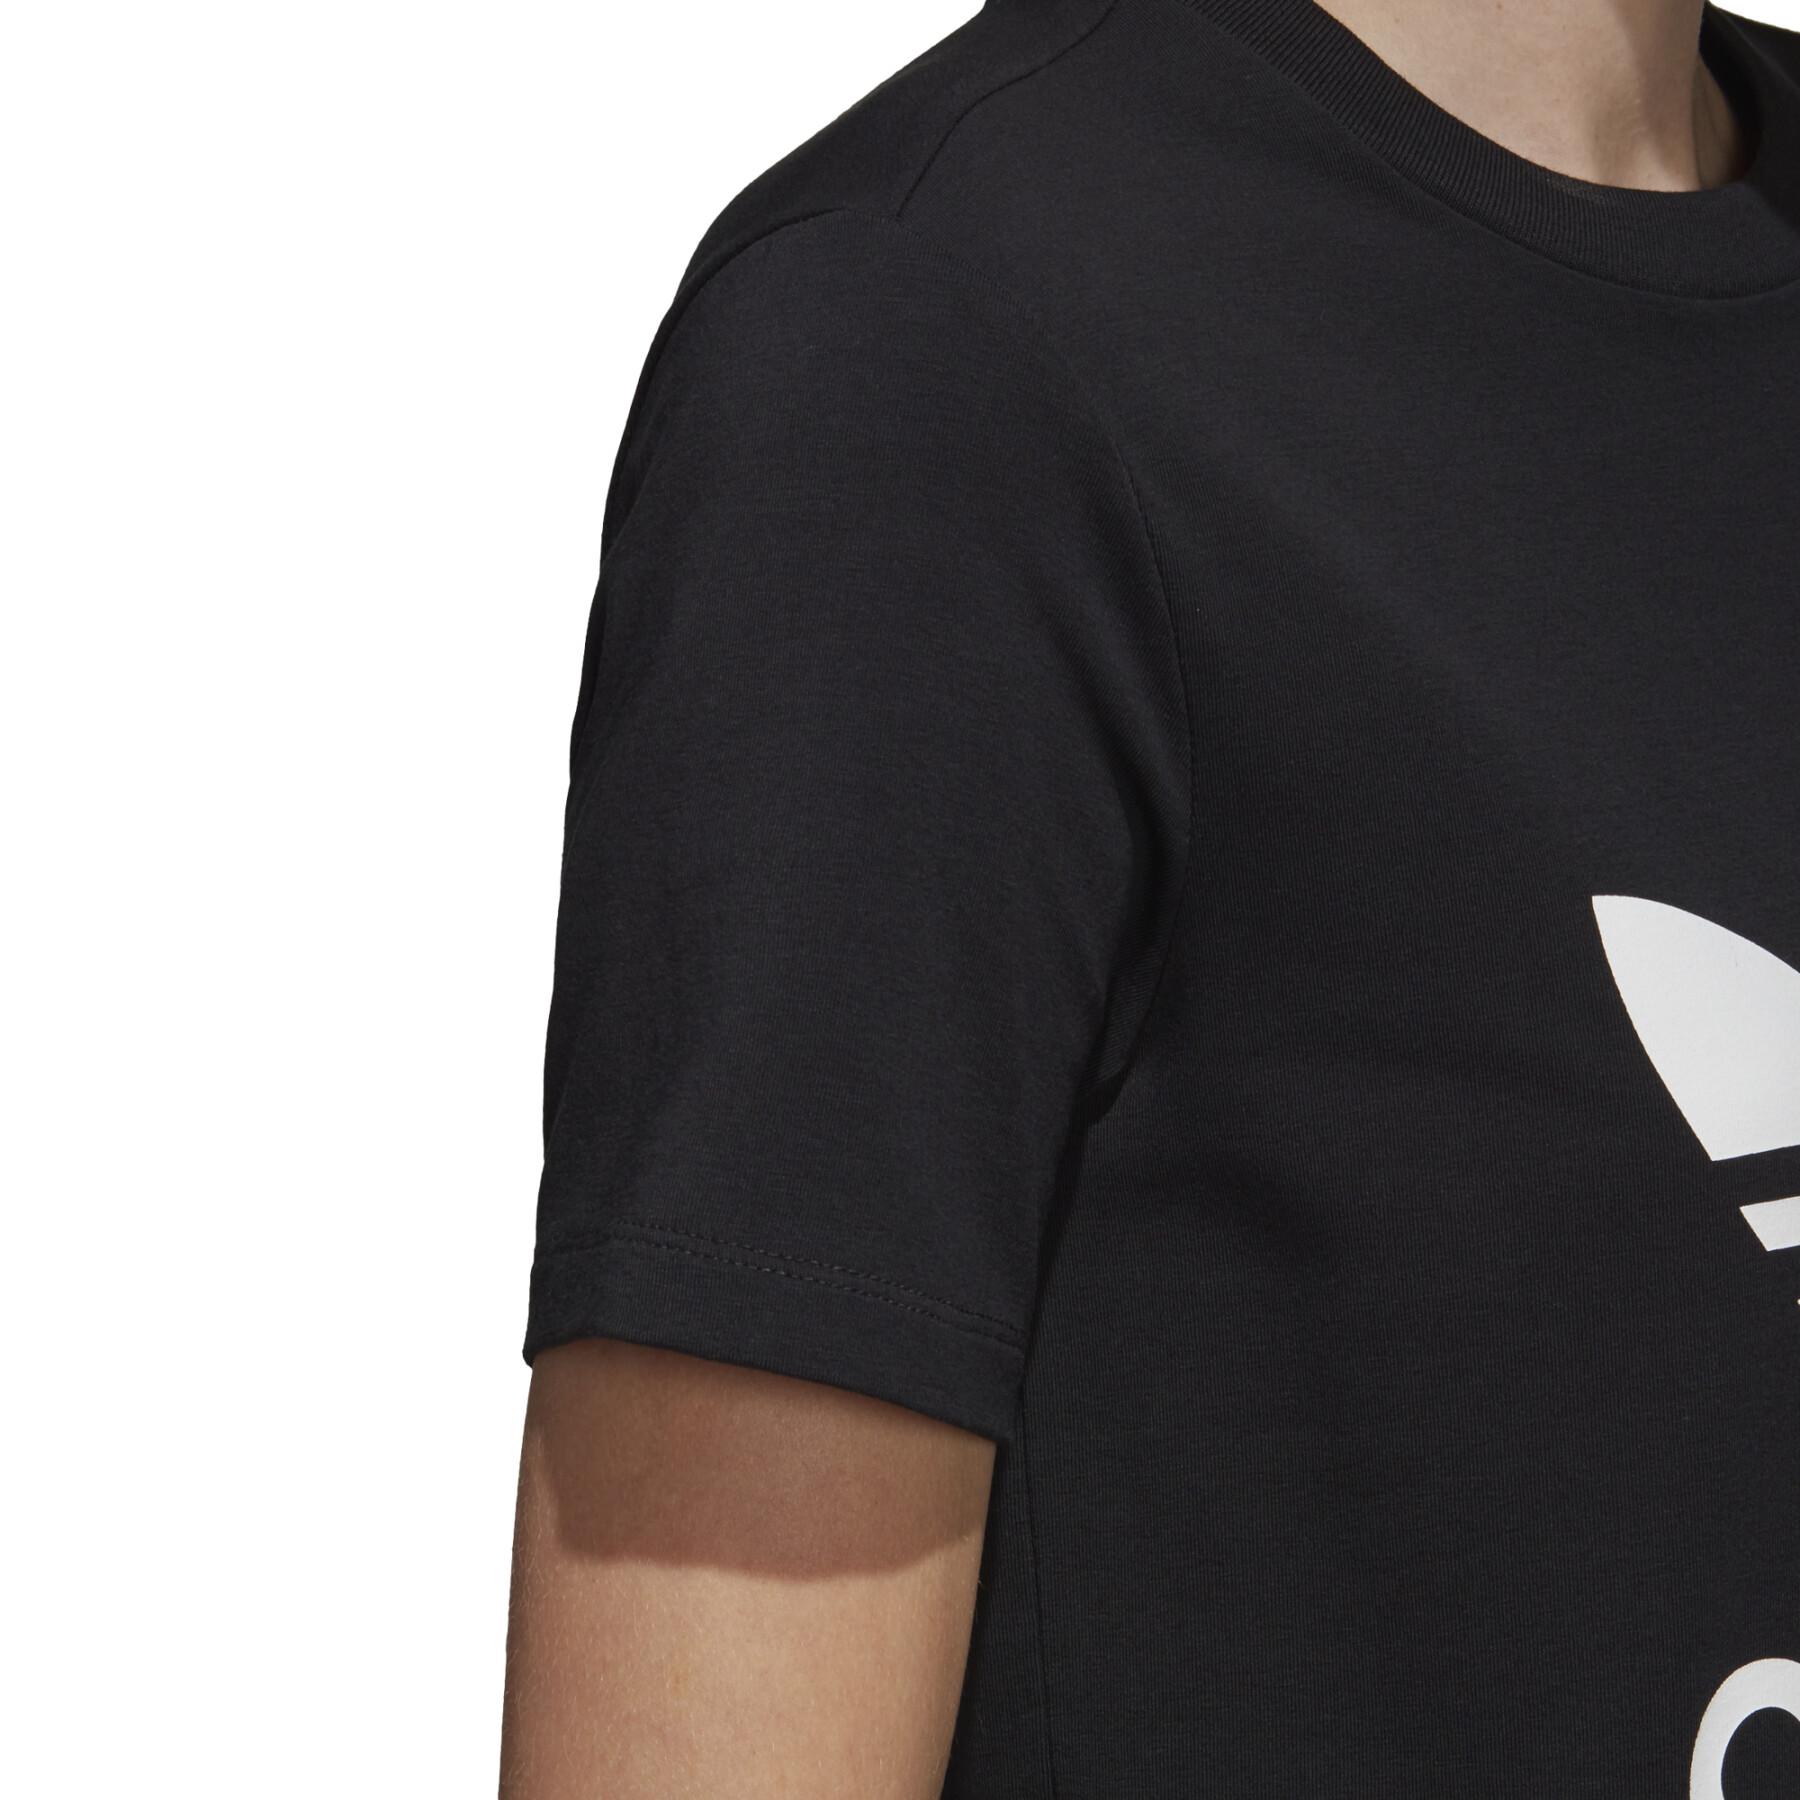 Dames-T-shirt adidas Trefoil maille jersey